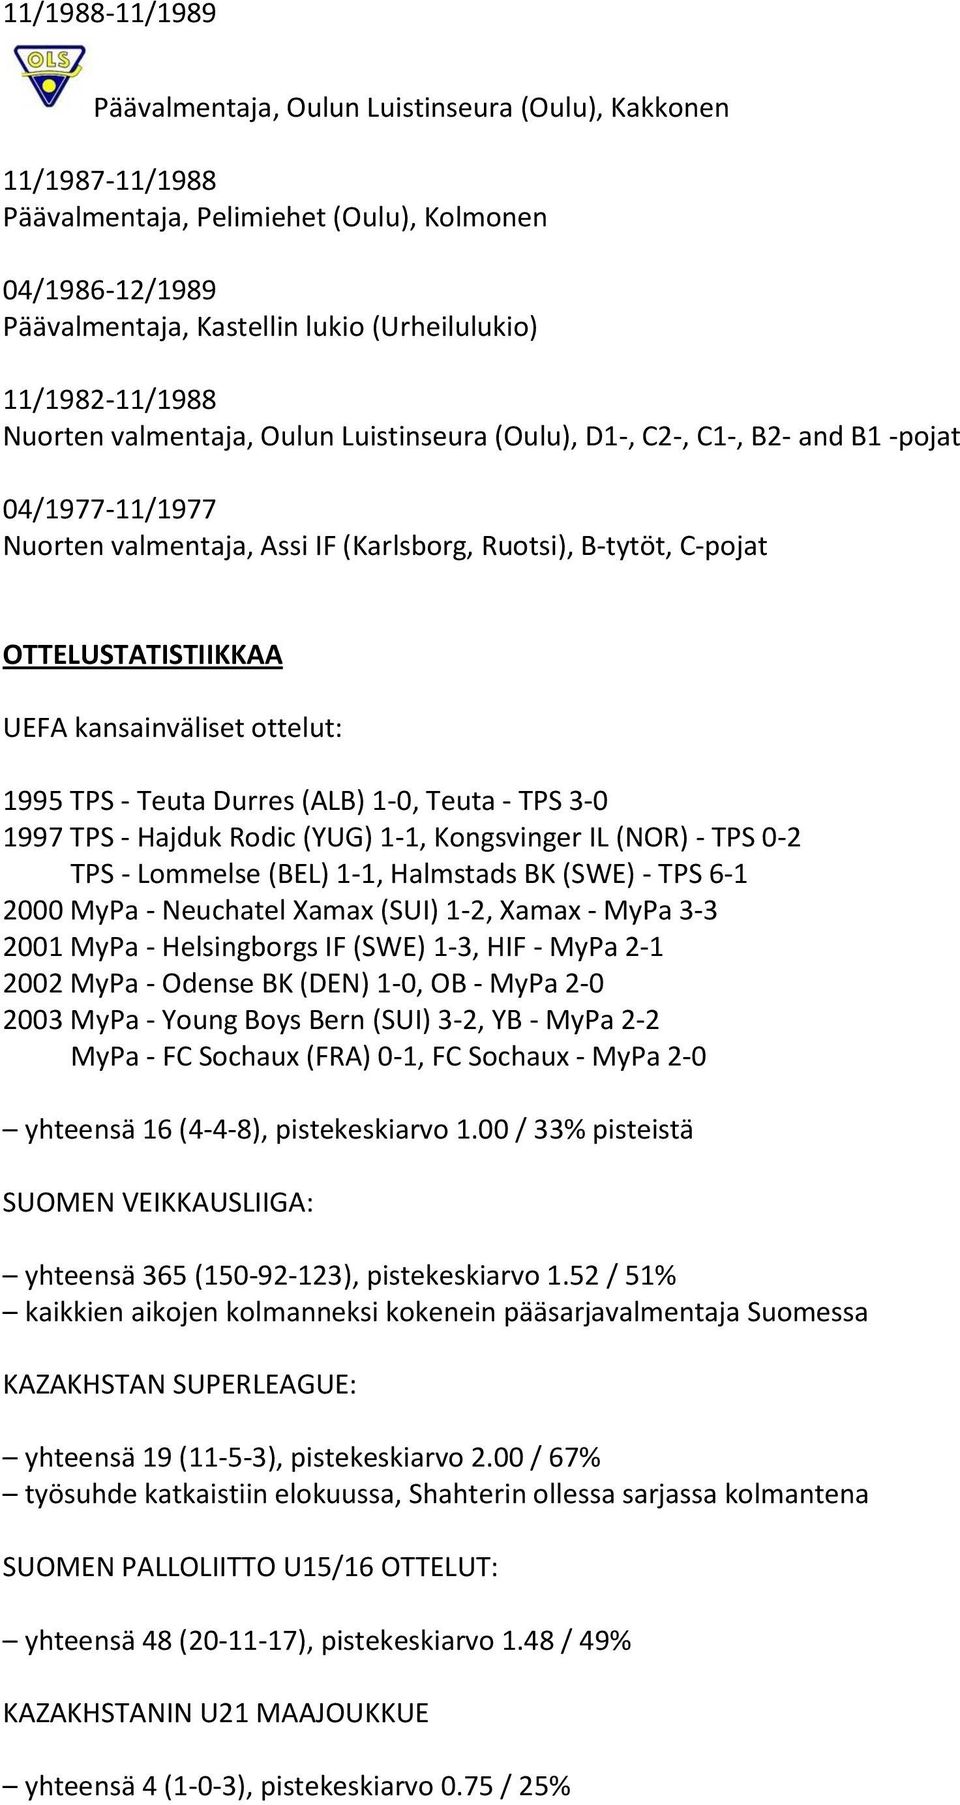 UEFA kansainväliset ottelut: 1995 TPS - Teuta Durres (ALB) 1-0, Teuta - TPS 3-0 1997 TPS - Hajduk Rodic (YUG) 1-1, Kongsvinger IL (NOR) - TPS 0-2 TPS - Lommelse (BEL) 1-1, Halmstads BK (SWE) - TPS